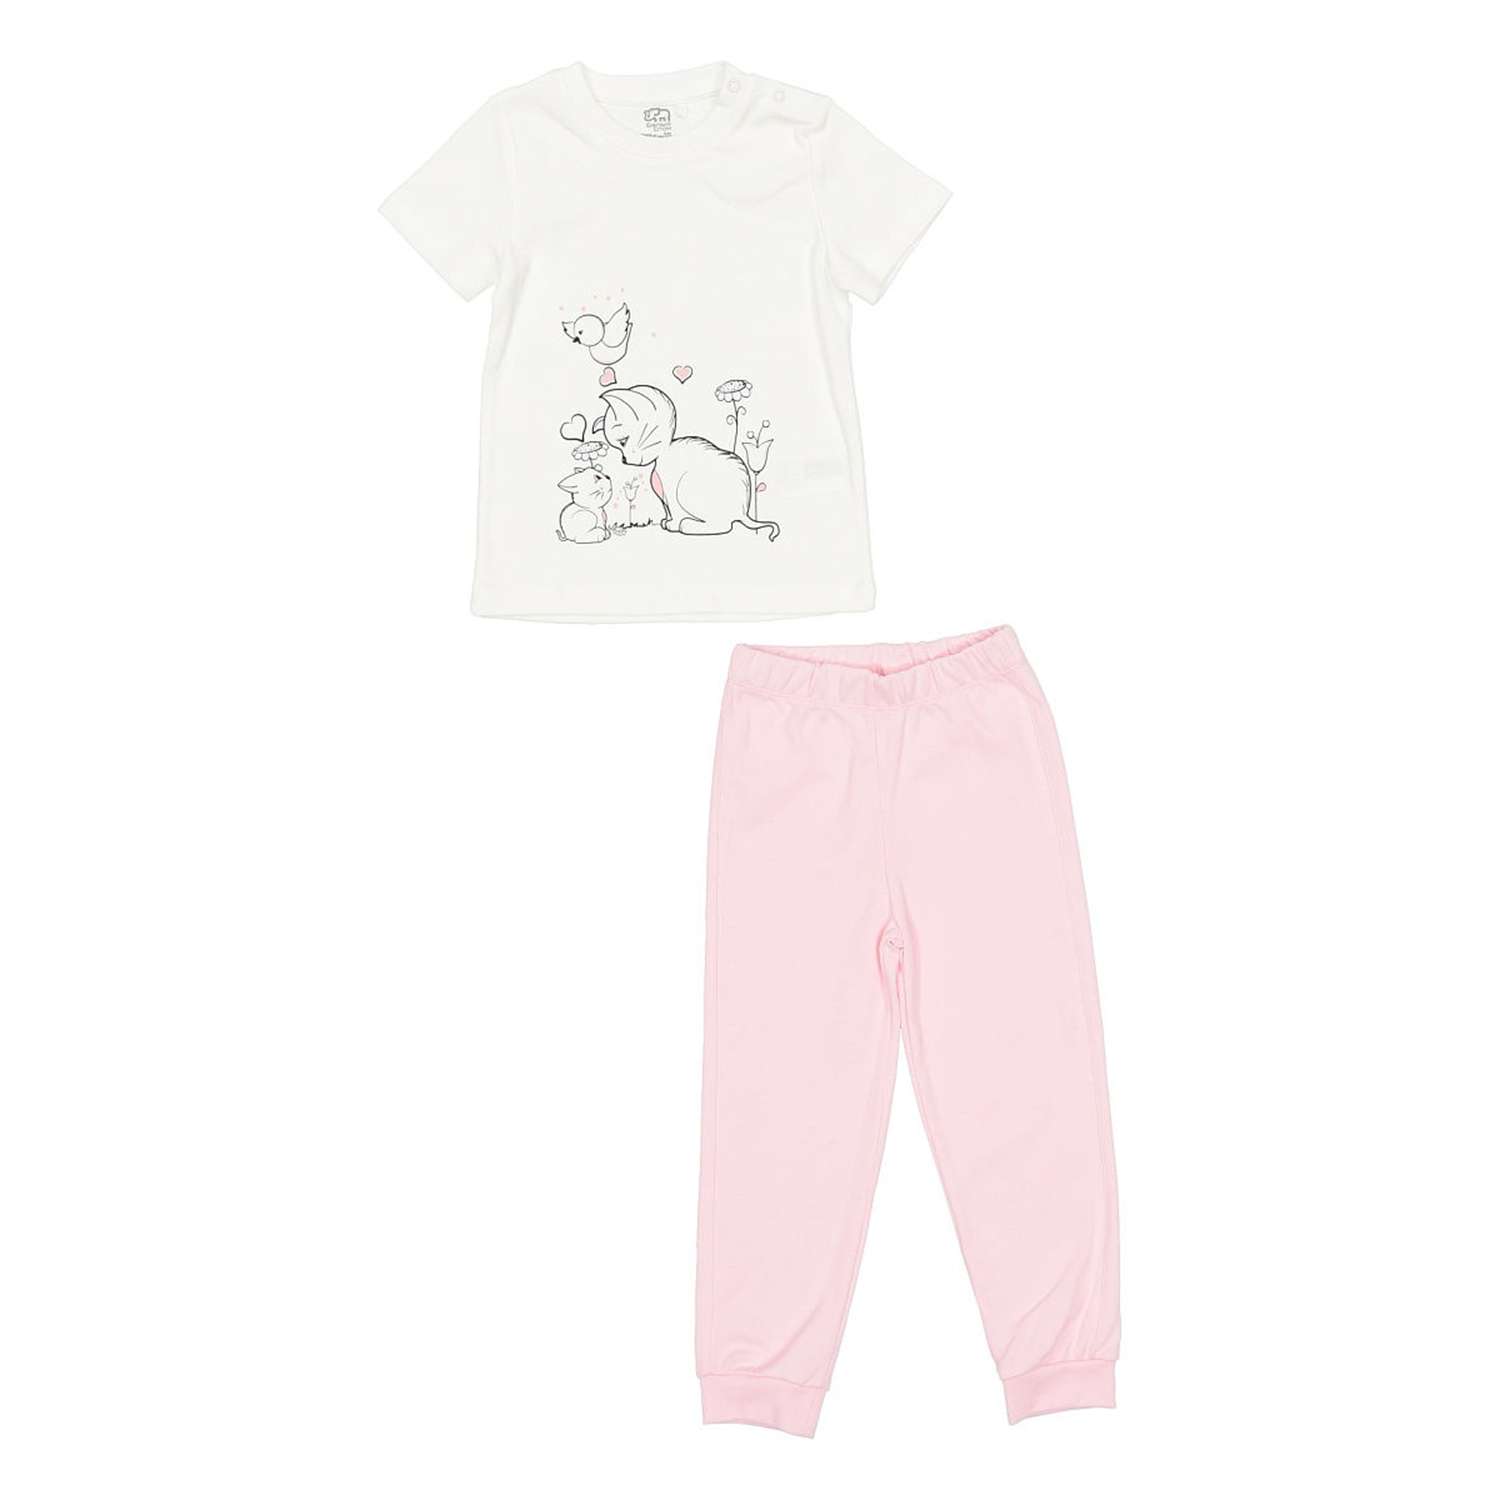 Пижама Белый слон 101.5306 Молочный/розовый - фото 1